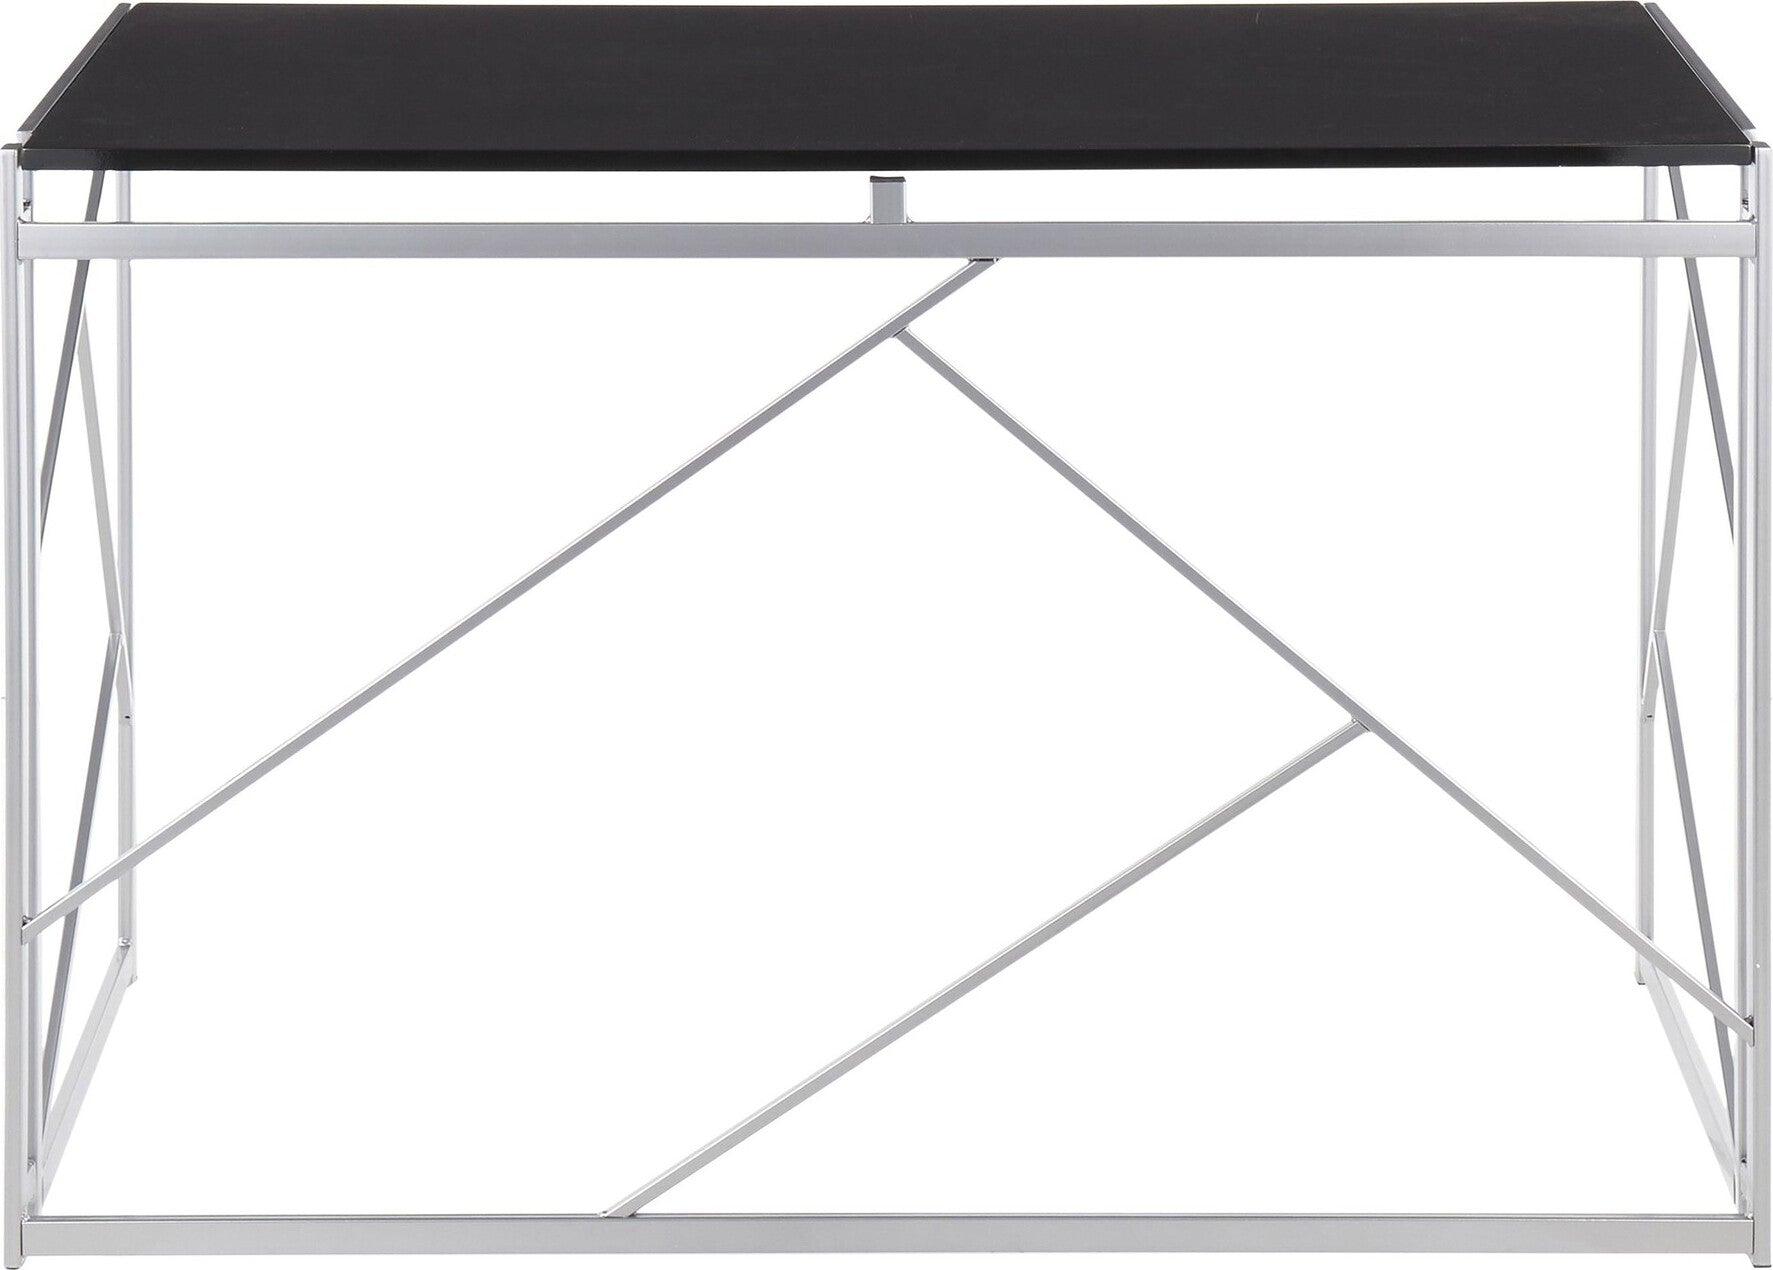 Lumisource Desks - Folia Desk Silver & Black